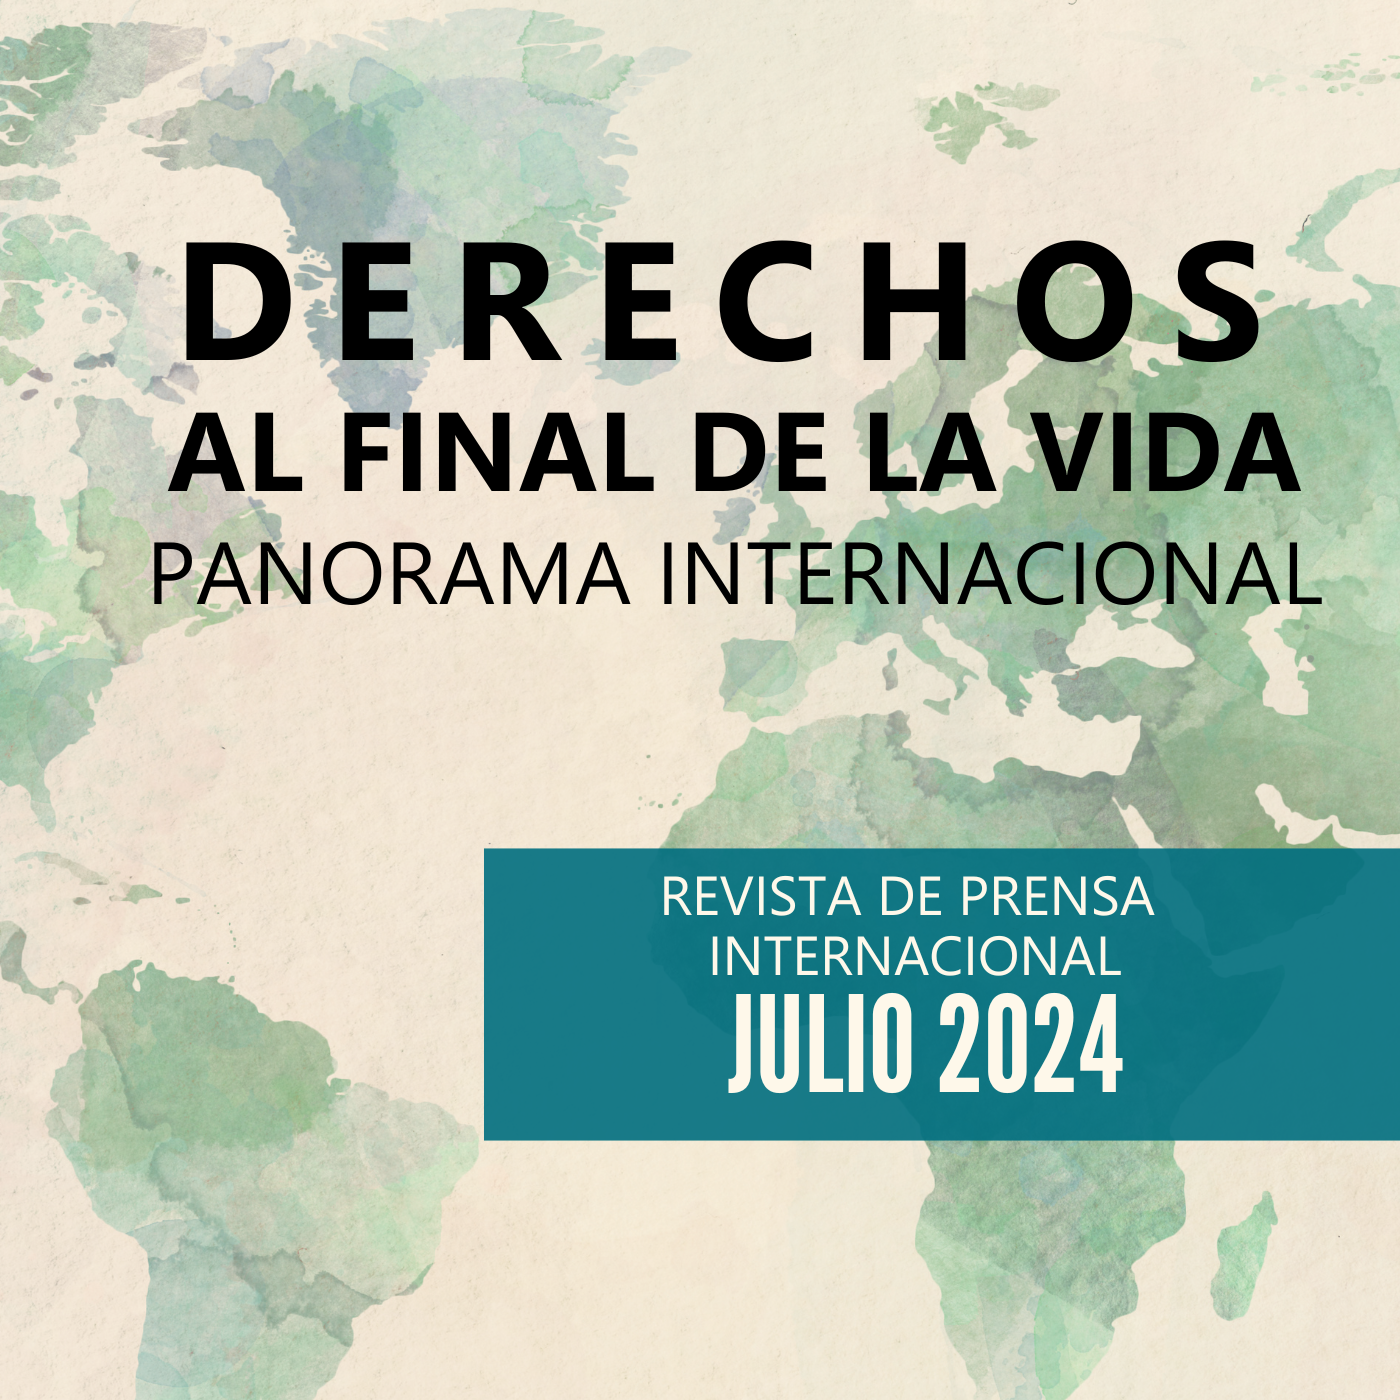 Featured image for “Revista de prensa internacional de julio de 2024”